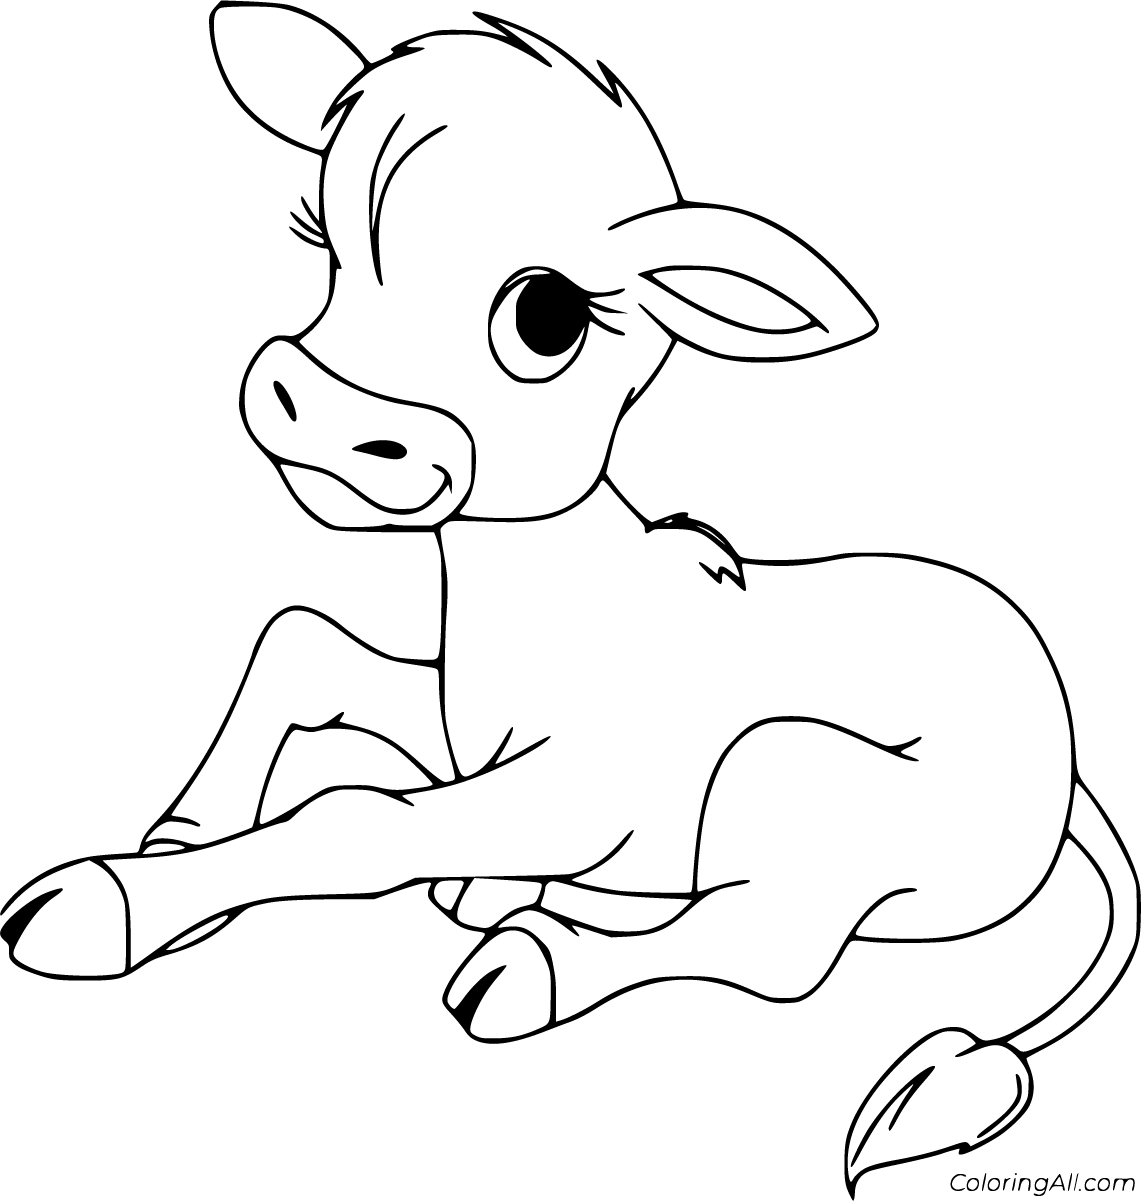 2,036 Pencil Sketch Cows Images, Stock Photos & Vectors | Shutterstock